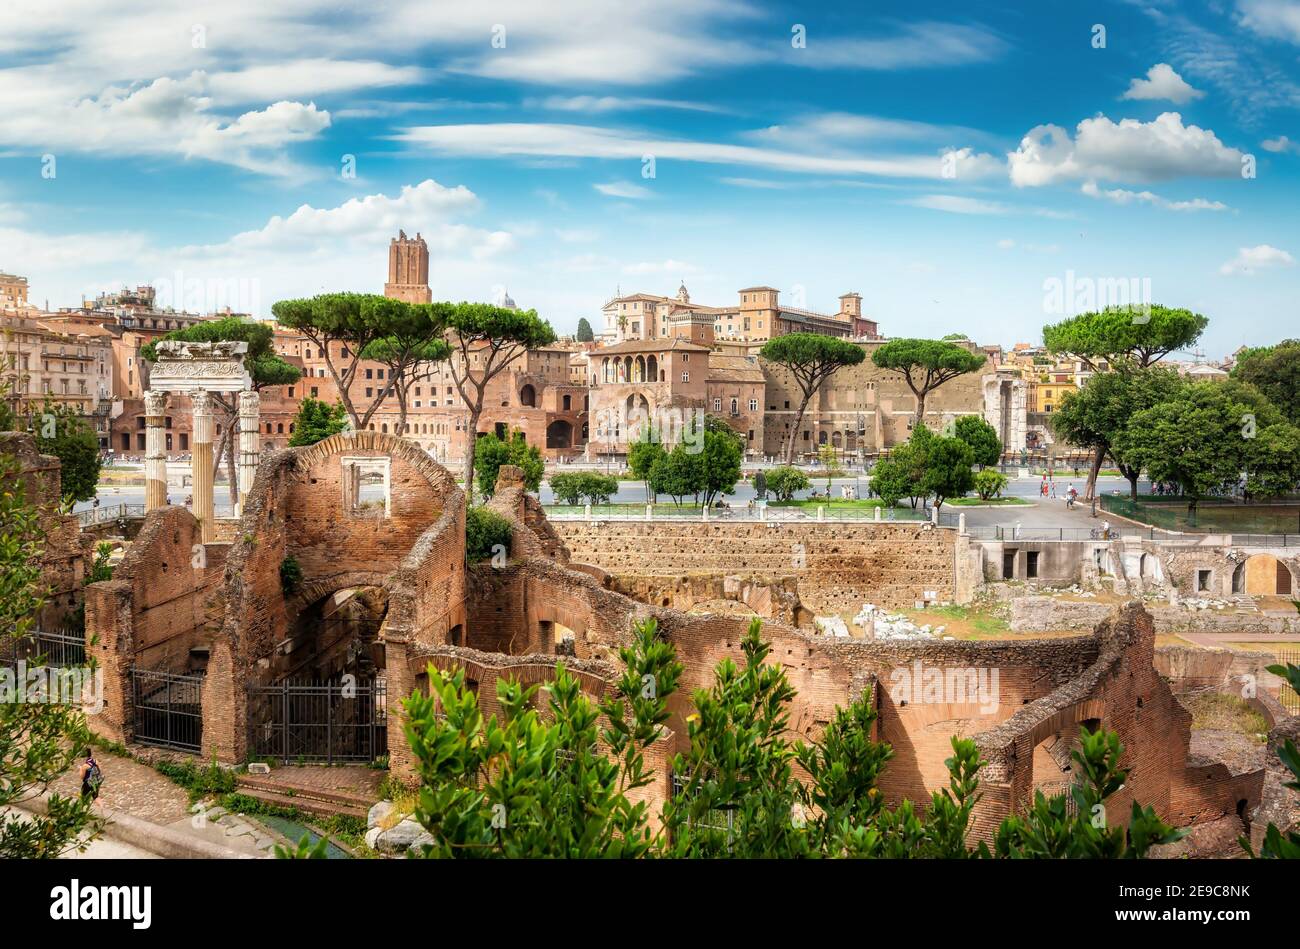 Ruins of Roman Forum in summer, Italy. Stock Photo